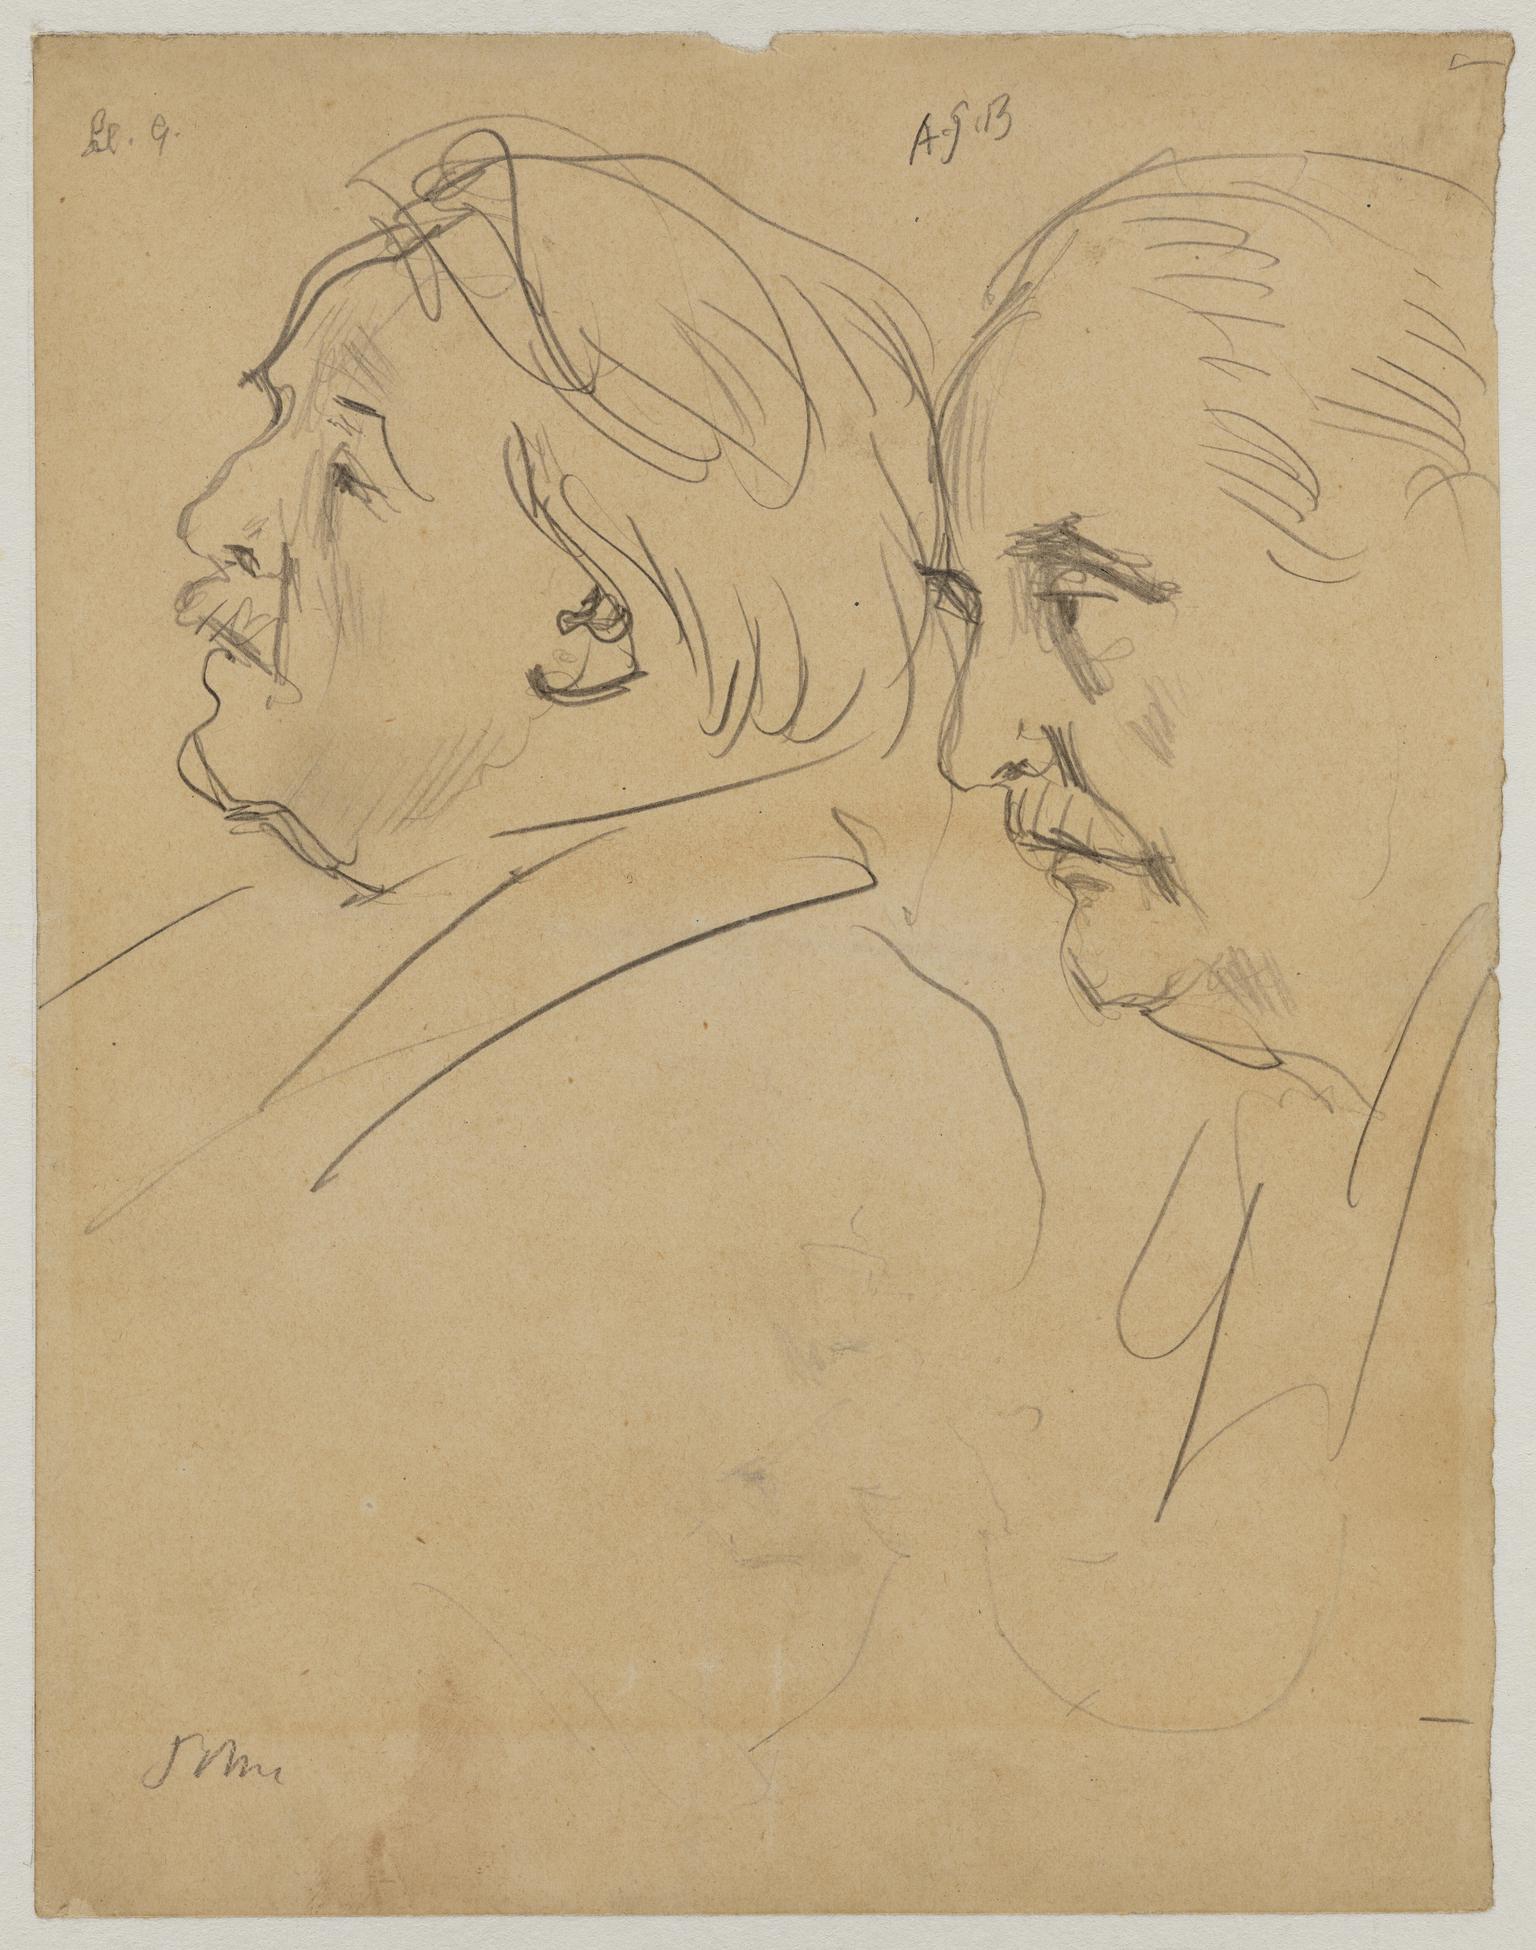 David Lloyd George and Arthur James Balfour